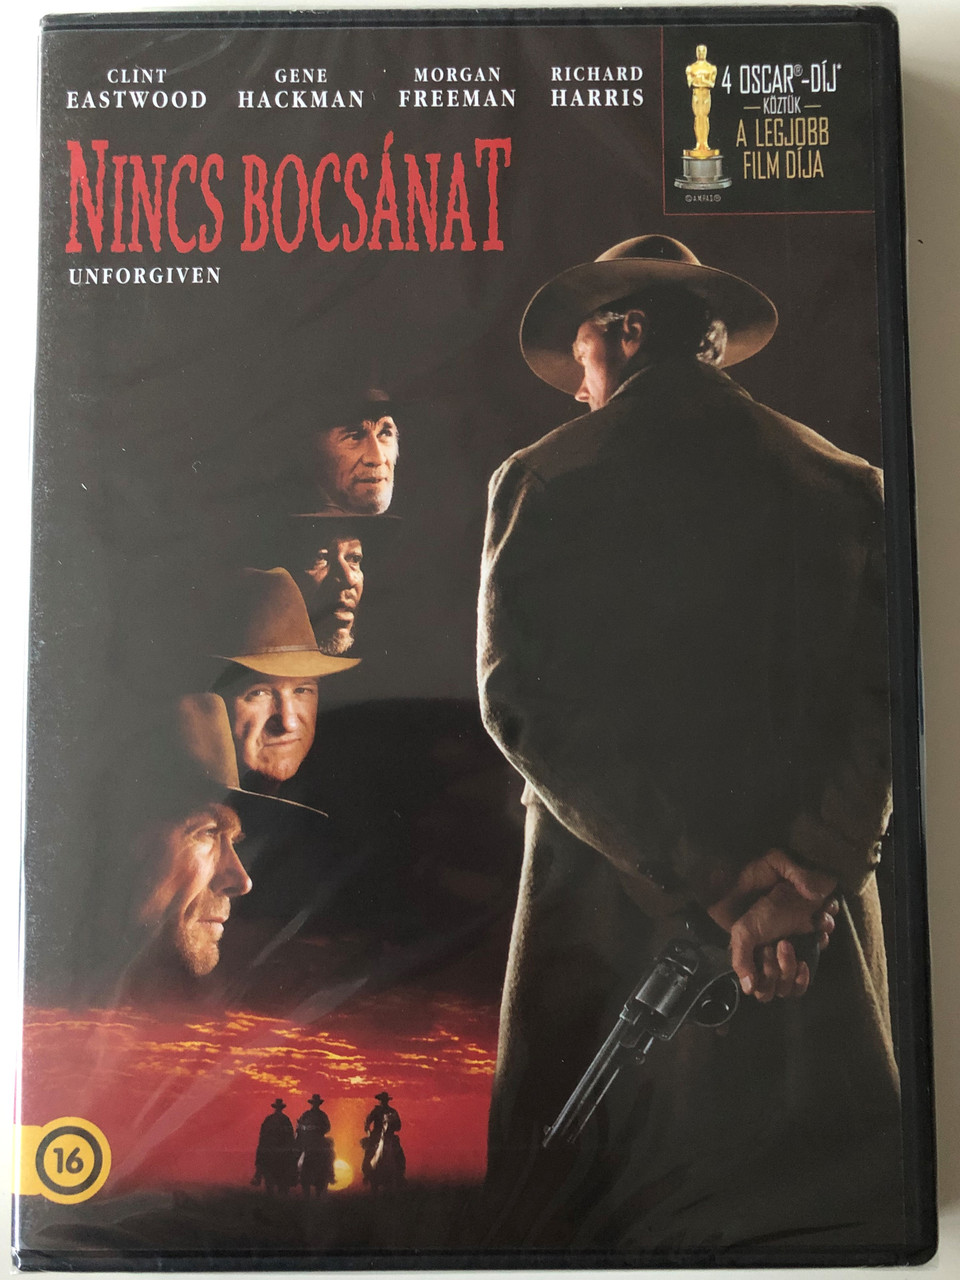 Unforgiven DVD 1992 Nincs bocsánat / Directed by Clint Eastwood / Starring:  Clint Eastwood, Gene Hackman, Morgan Freeman, Richard Harris -  bibleinmylanguage